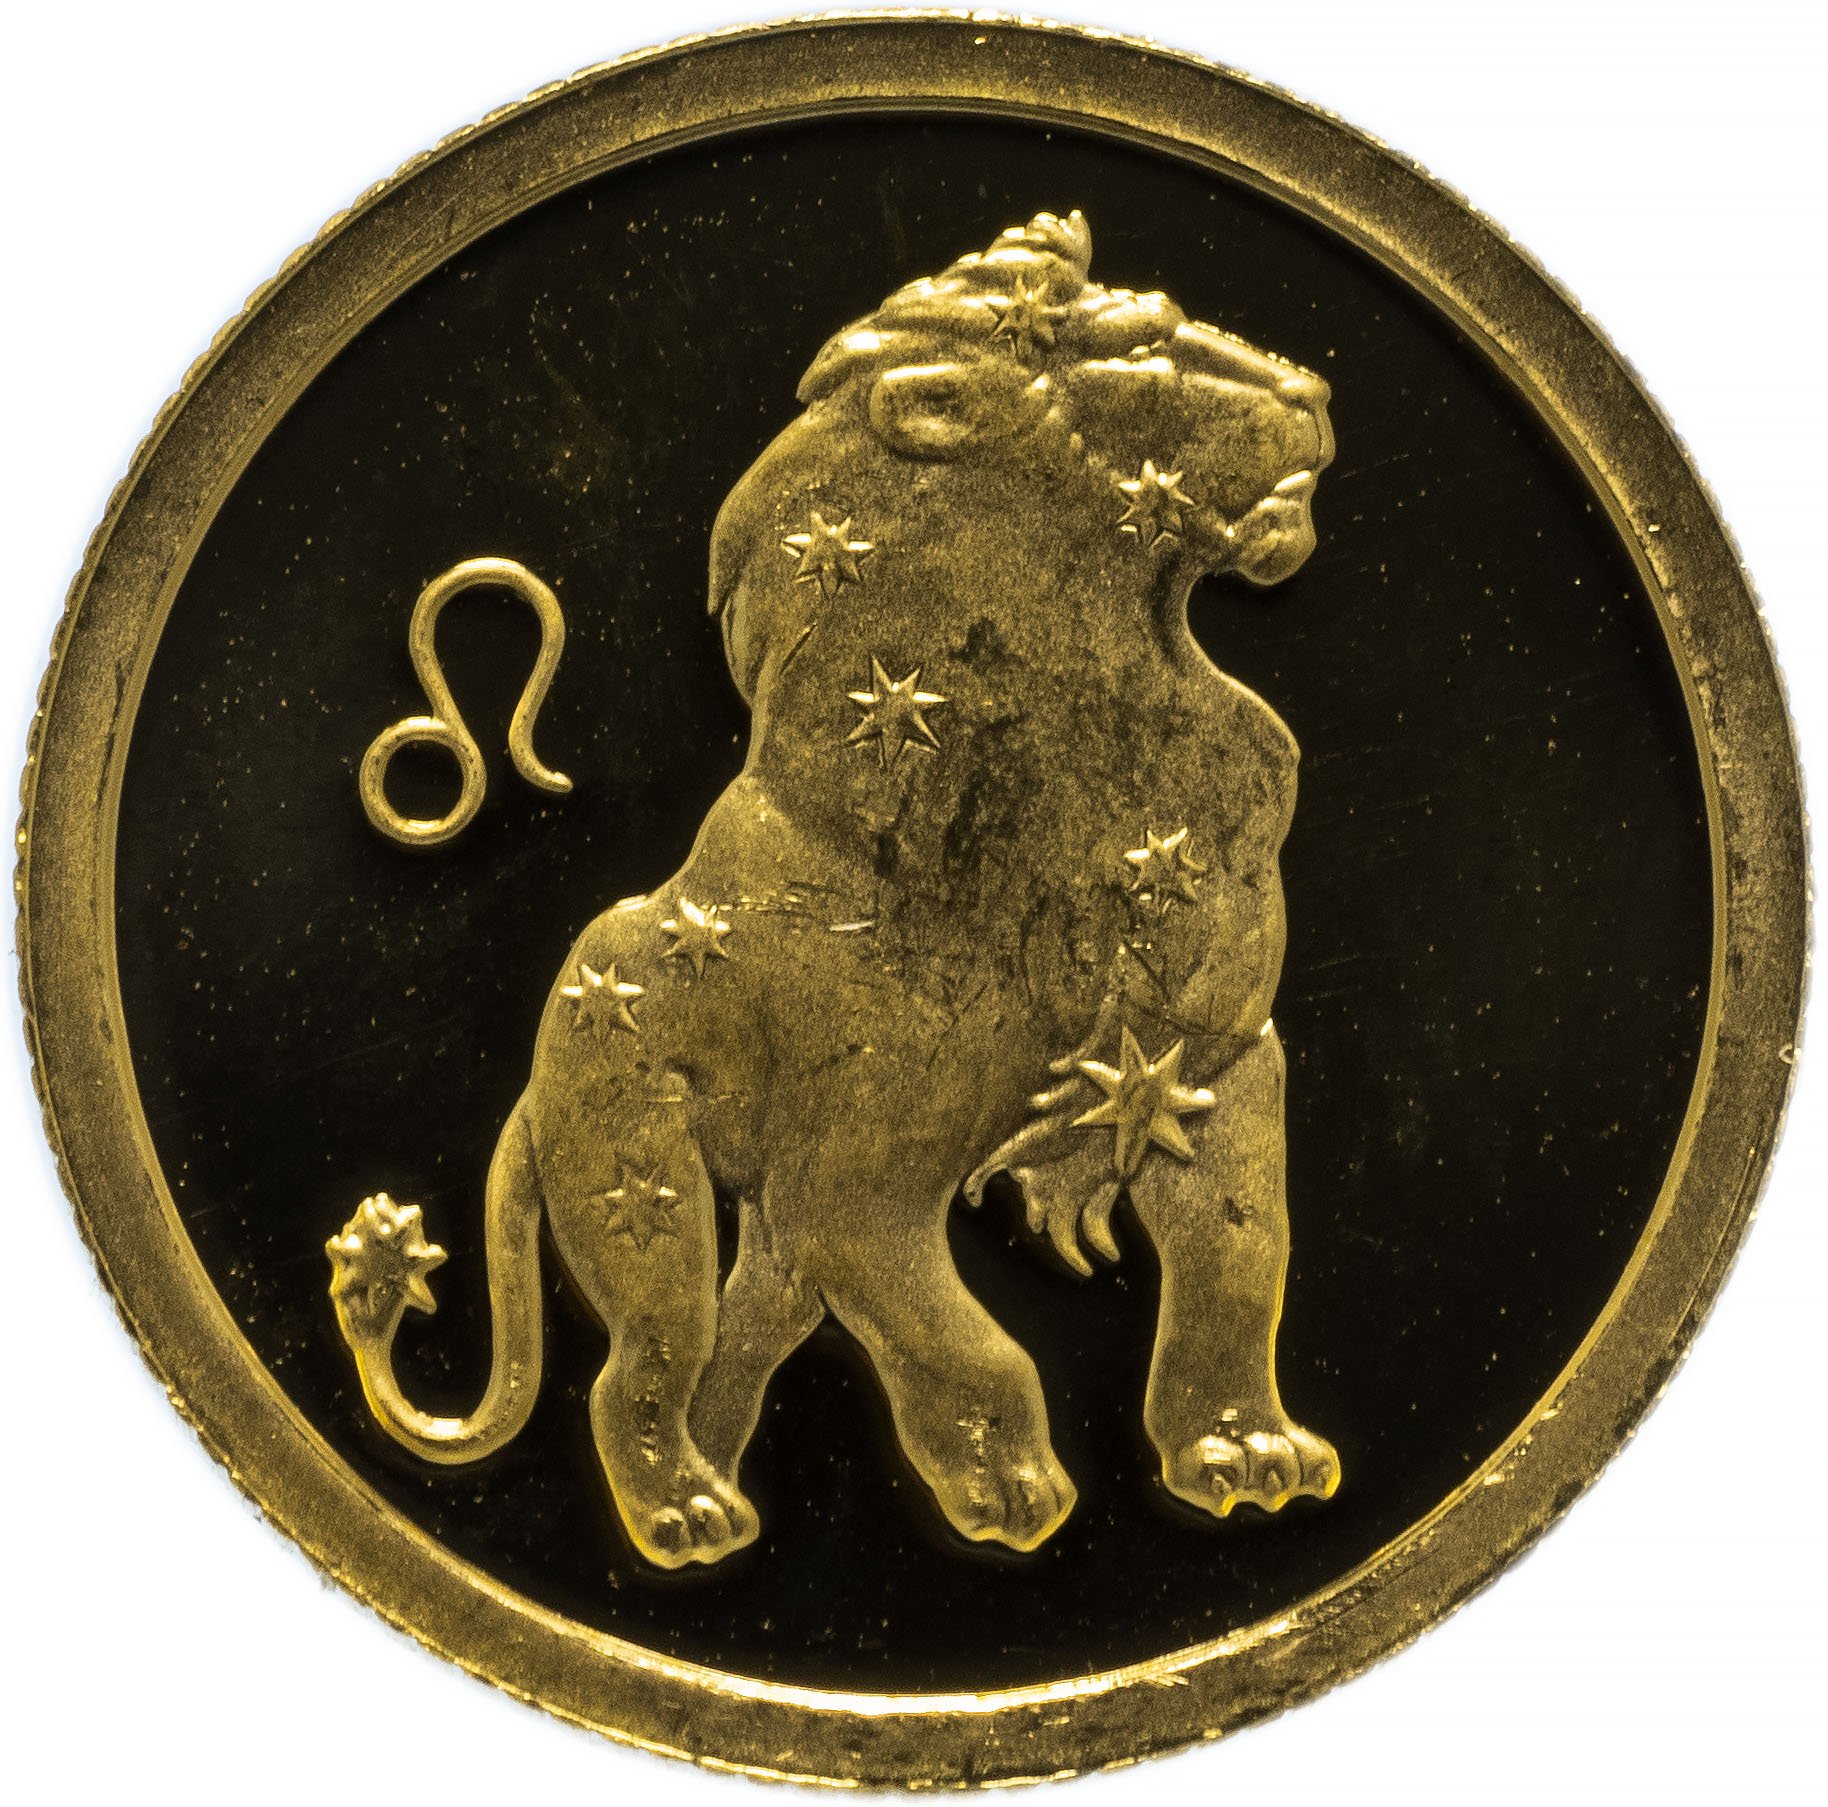 Монеты со знаком. Монета знак зодиака Лев. Золотая монета Лев знак зодиака. Монета со знаком зодиака. Монеты знаки зодиака золото.